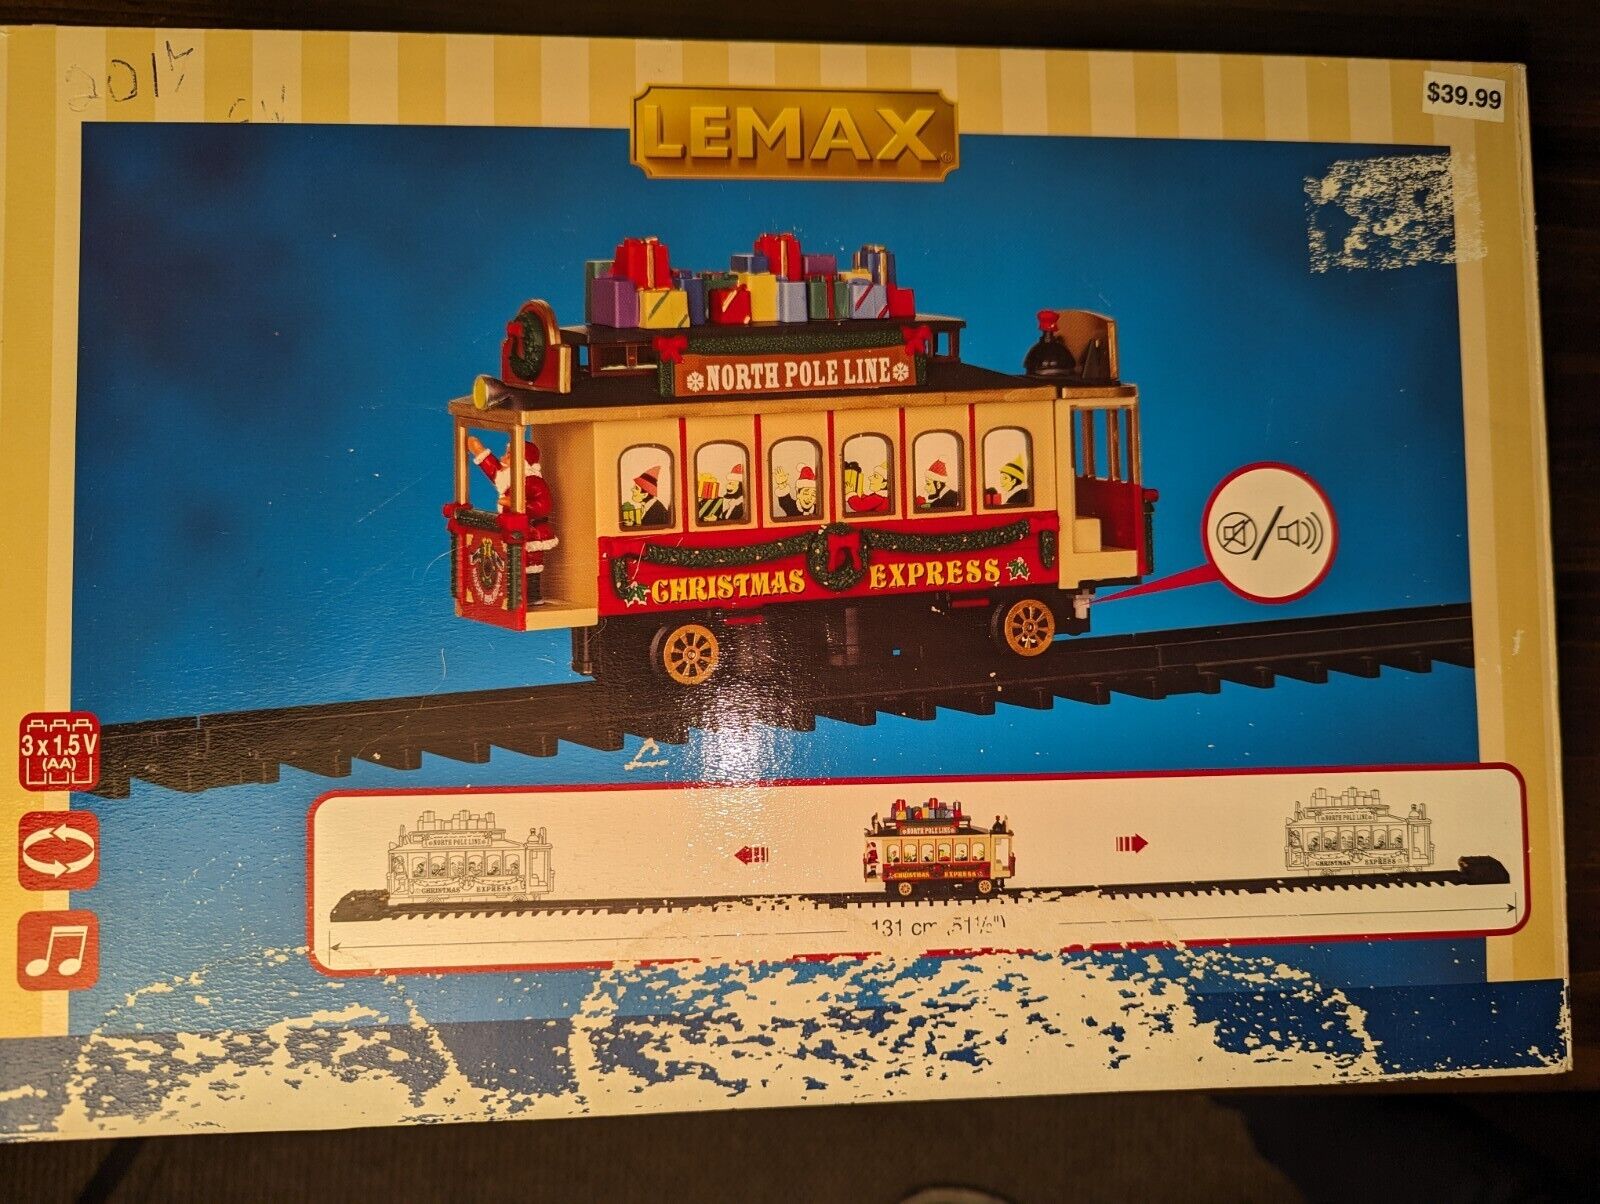 Lemax Santa's Cable Car Christmas Train North Pole Line Sights Sounds Tracks New